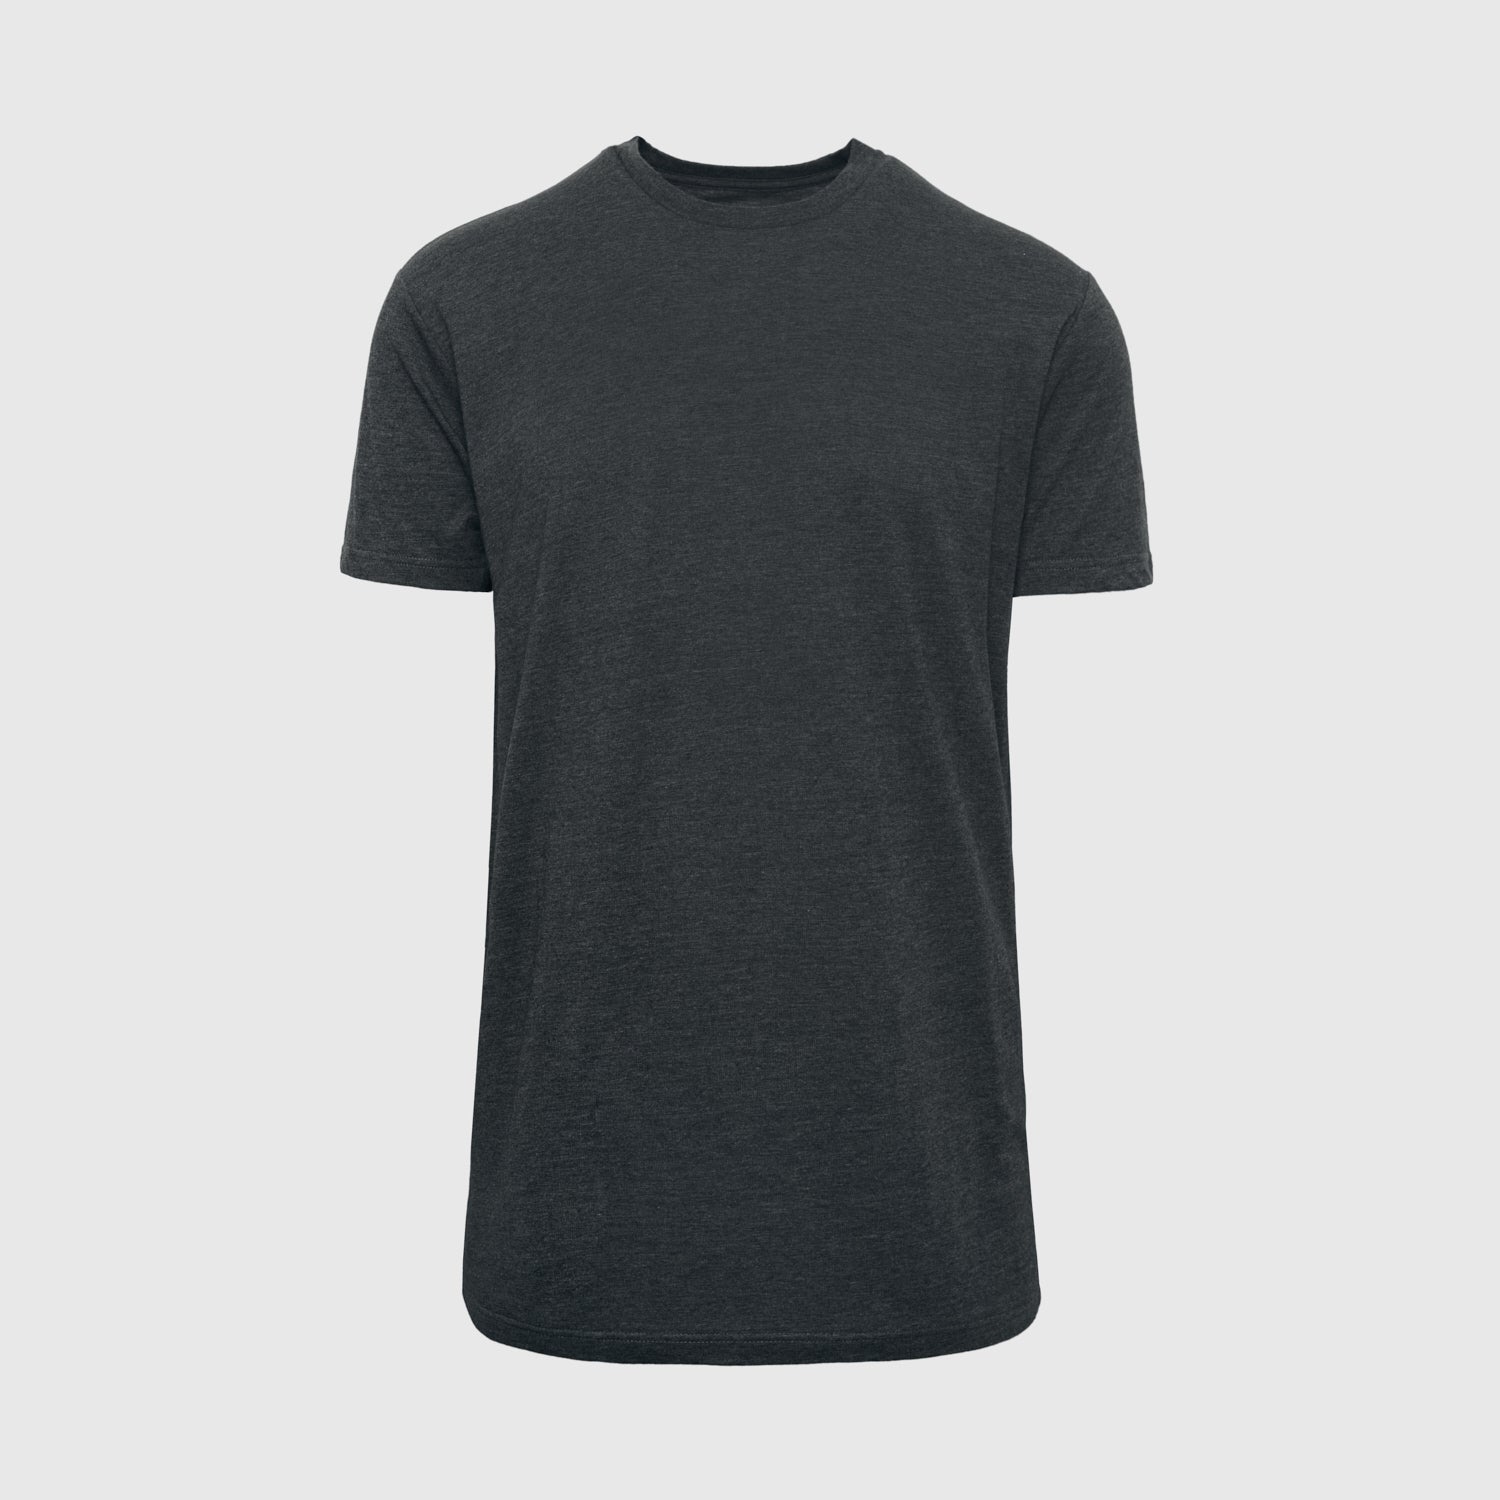 Trout Paint T-Shirt - Black or Dark Heather Grey XL / Black